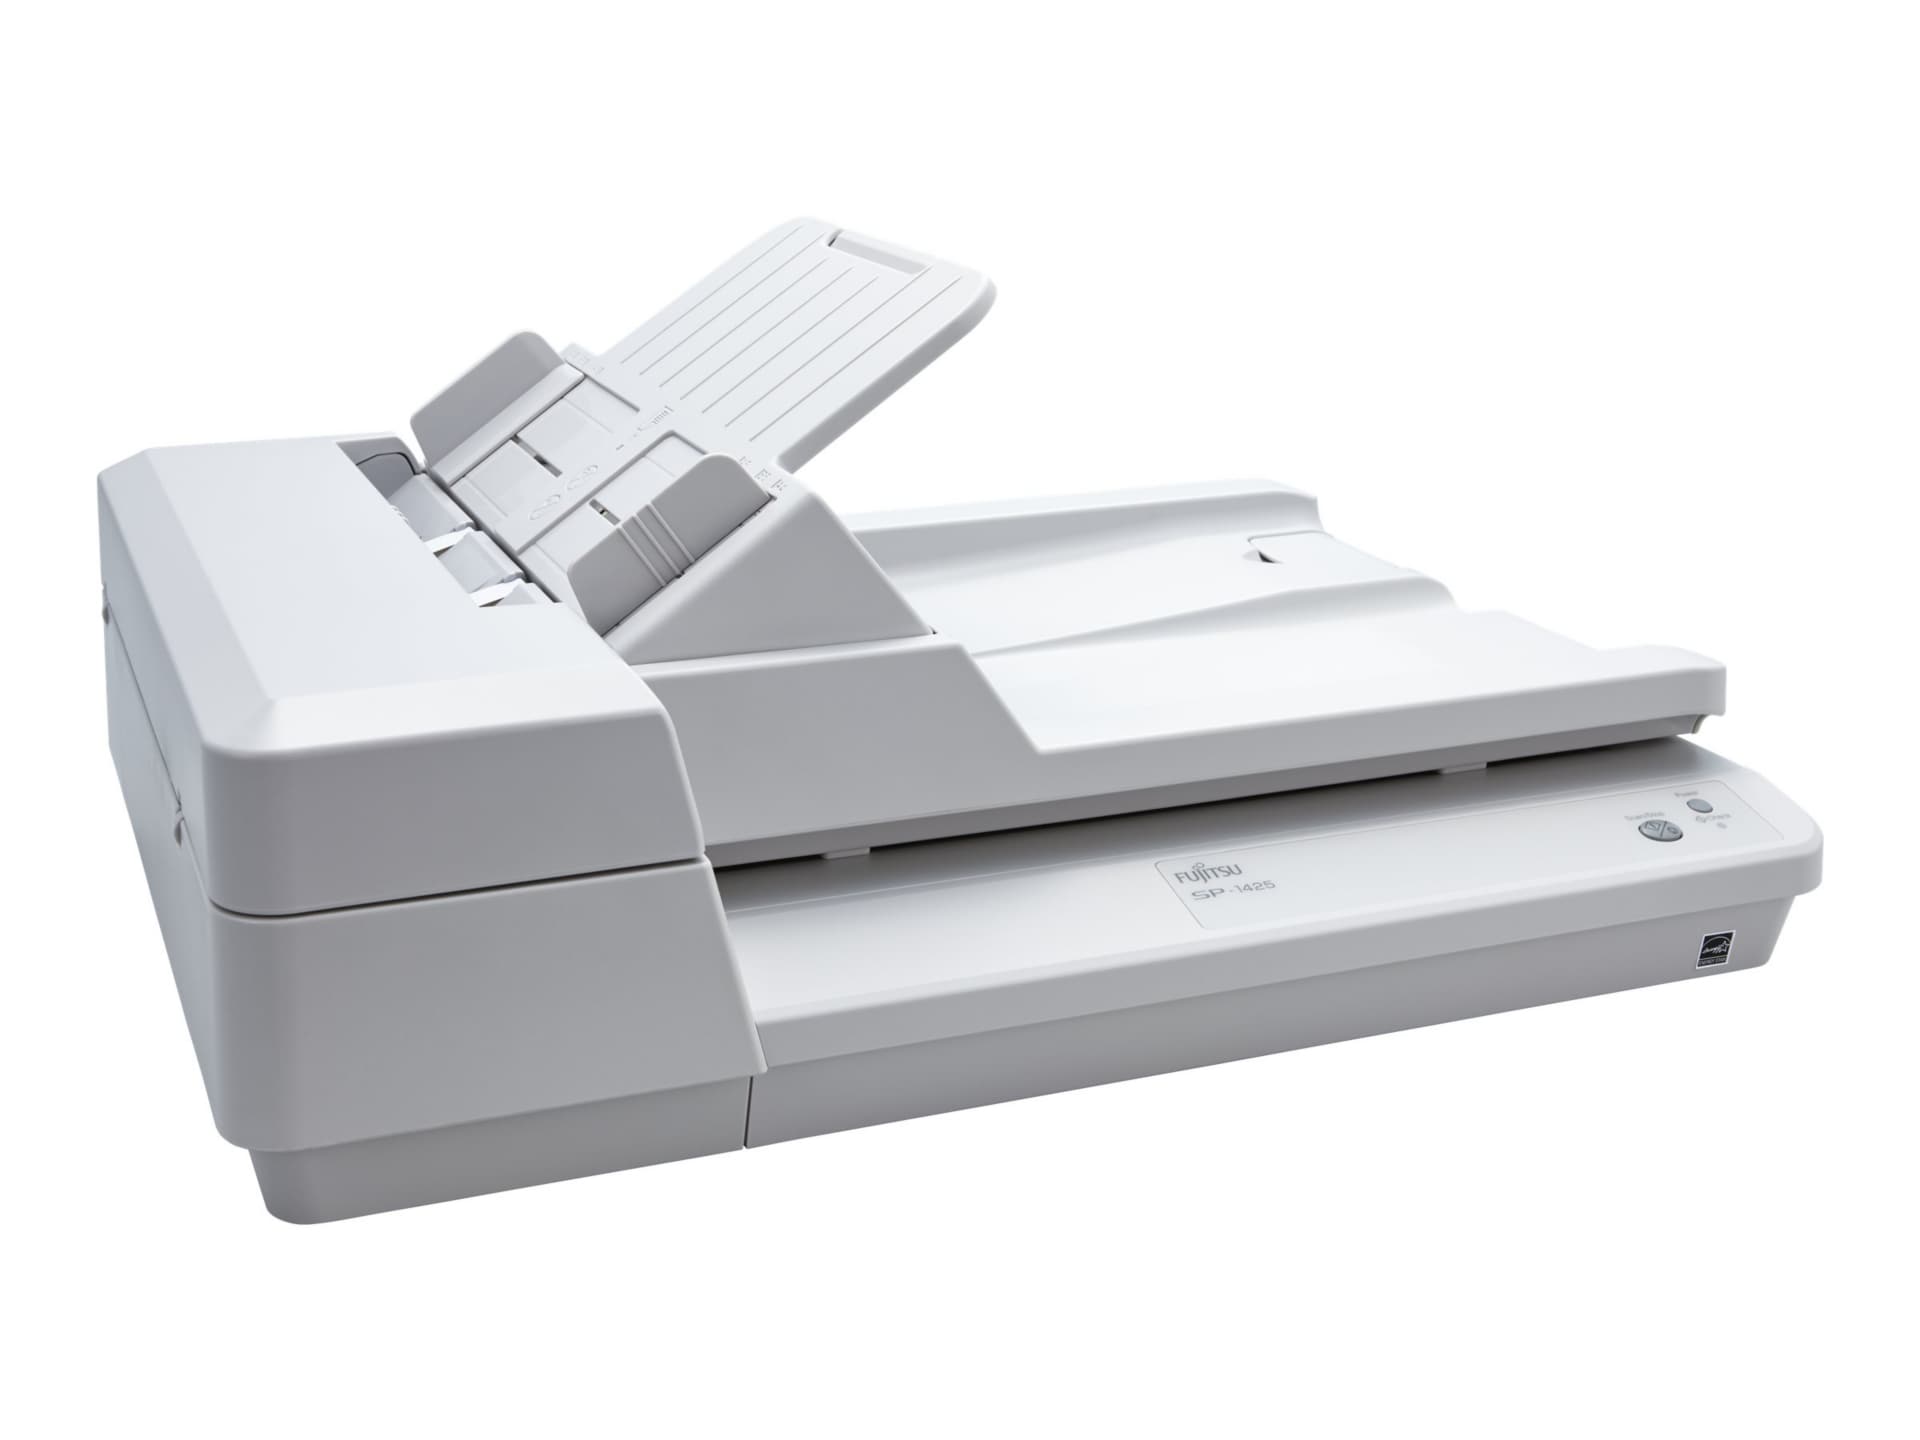 Fujitsu SP-1425 – flatbed document scanner - USB 2.0